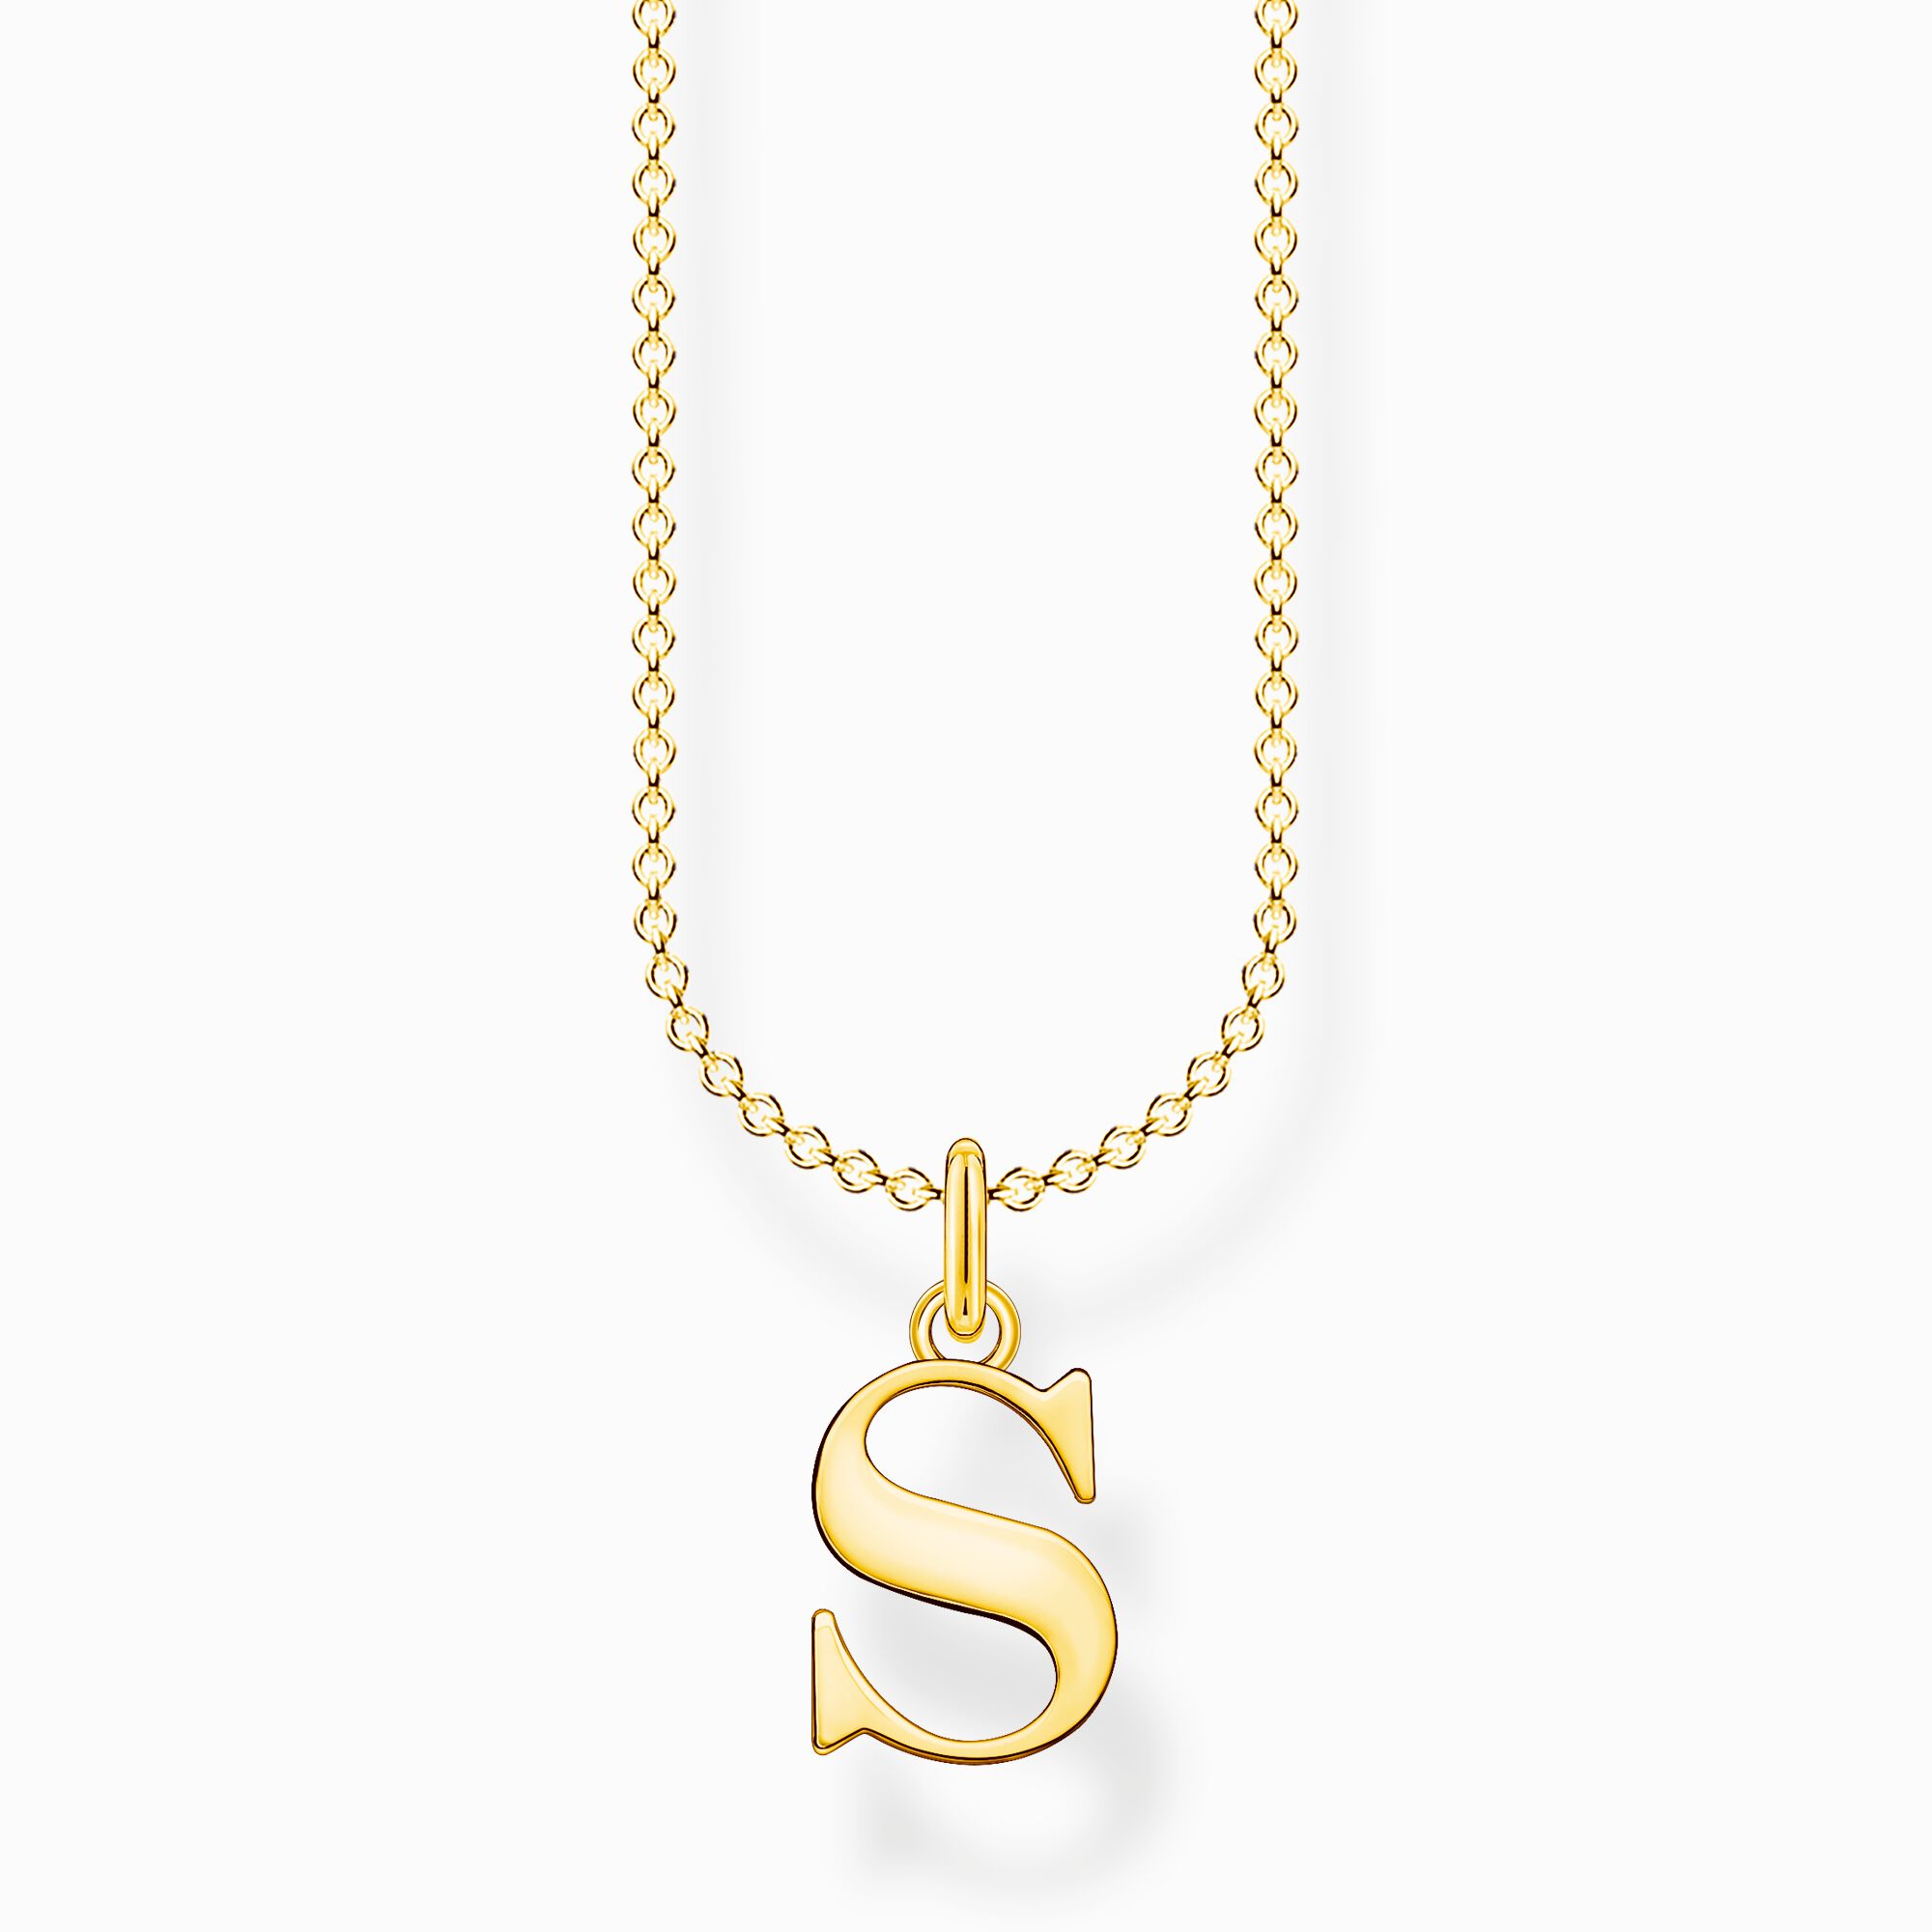 Halsband bokstaven s guld ur kollektionen Charming Collection i THOMAS SABO:s onlineshop